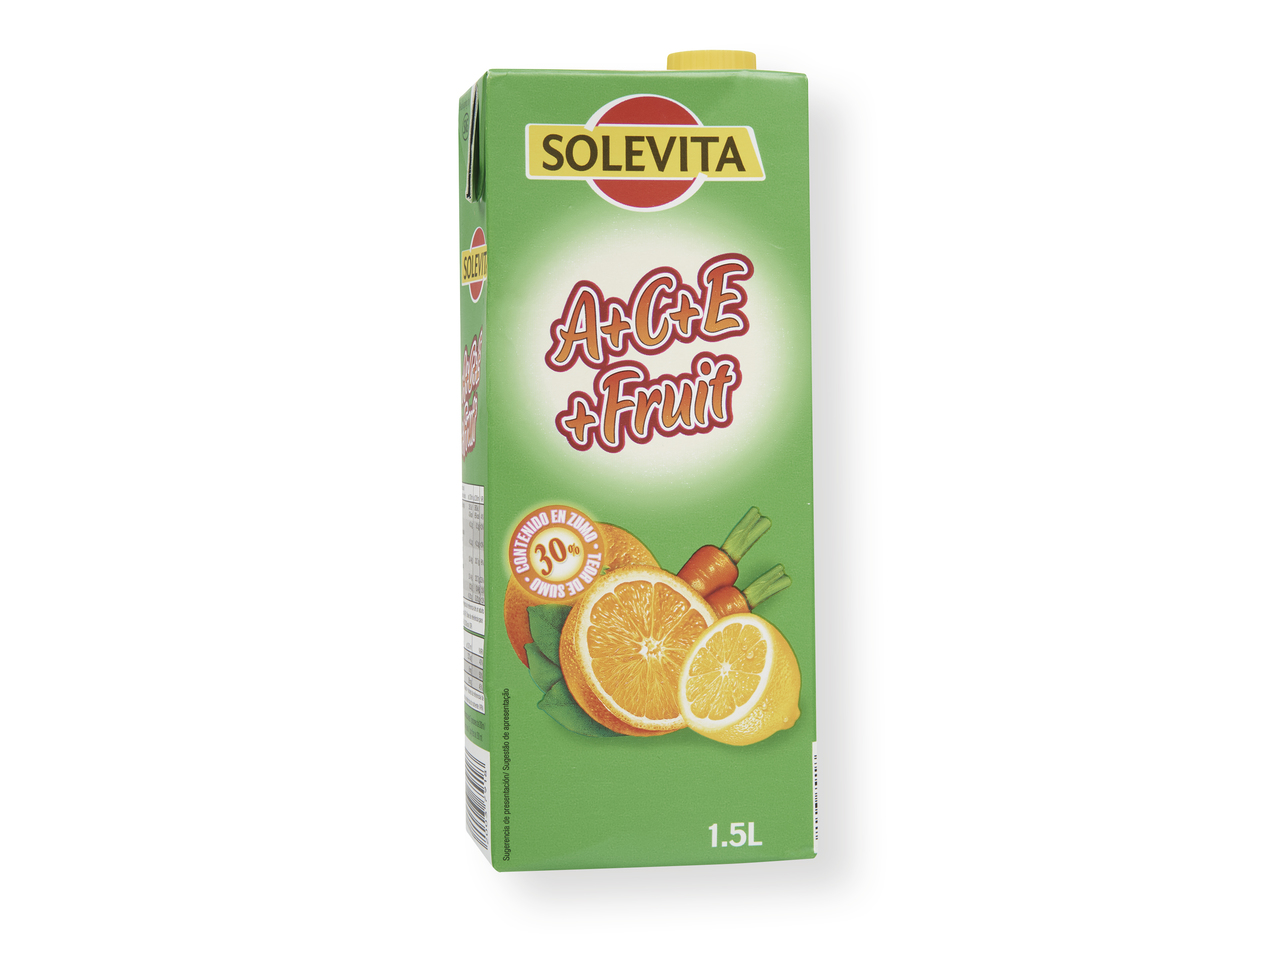 'Solevita(R)' Bebida enriquecida ACE